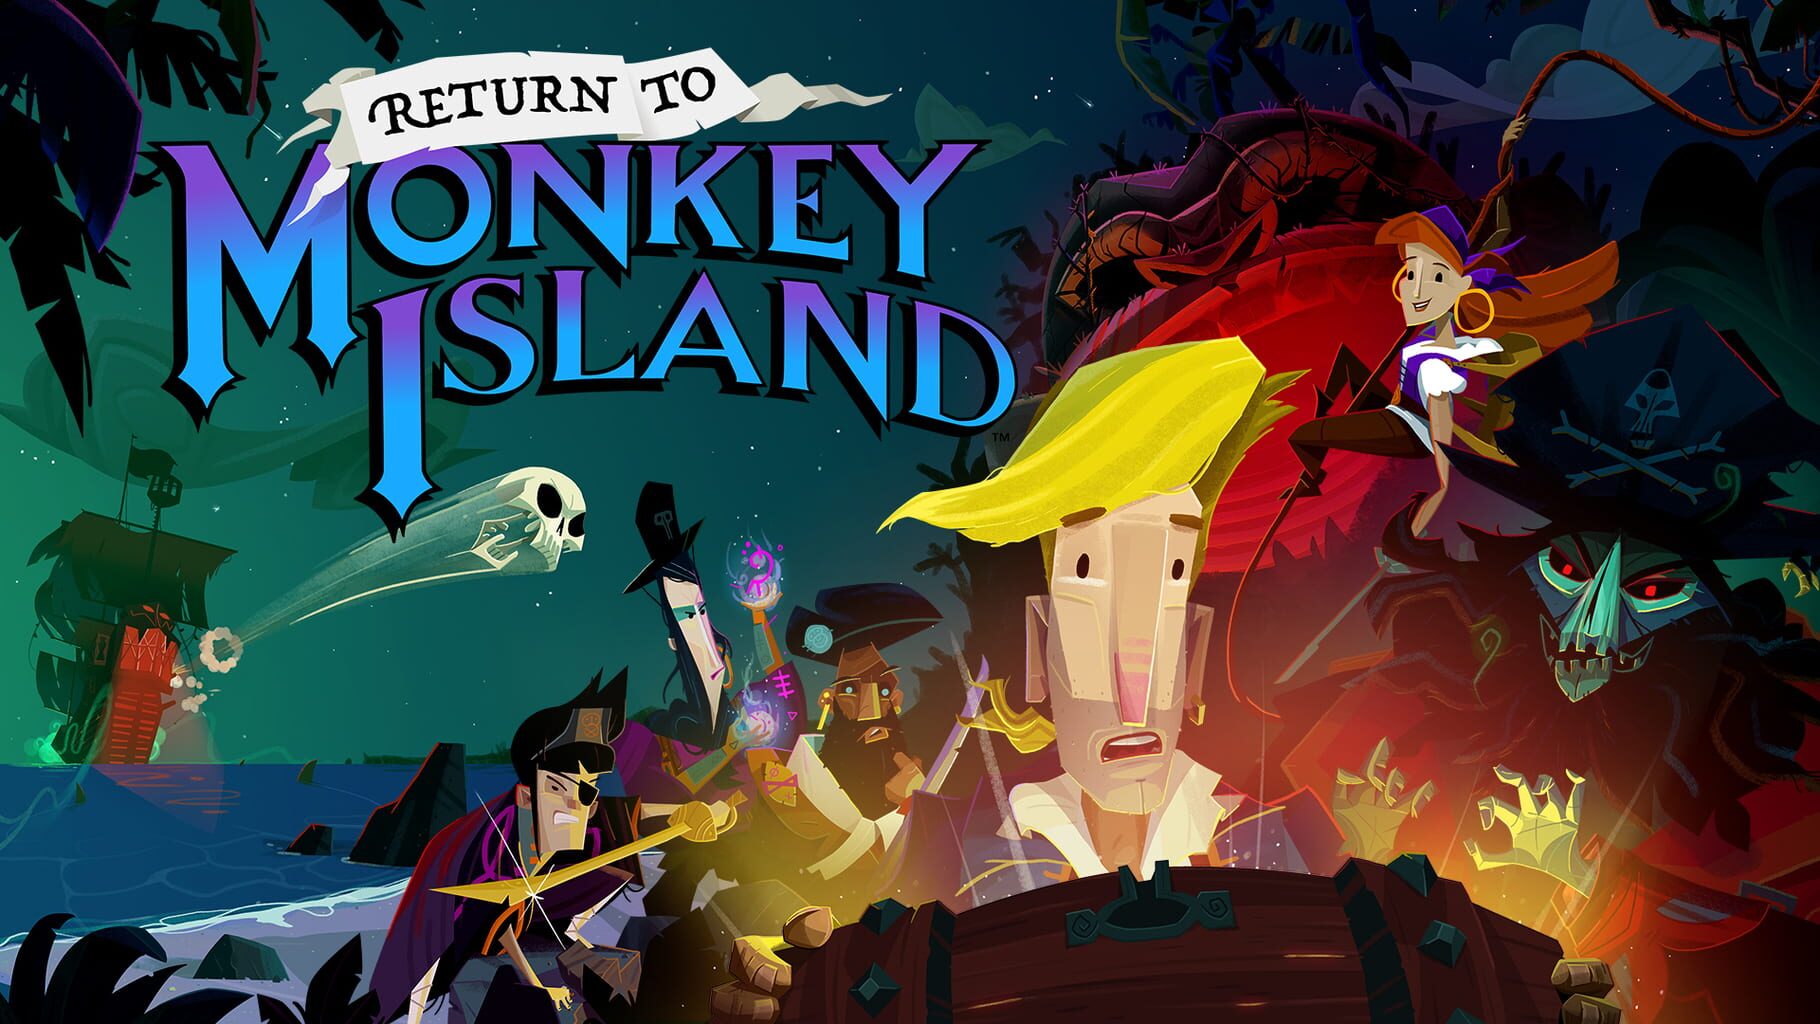 Artwork for Return to Monkey Island